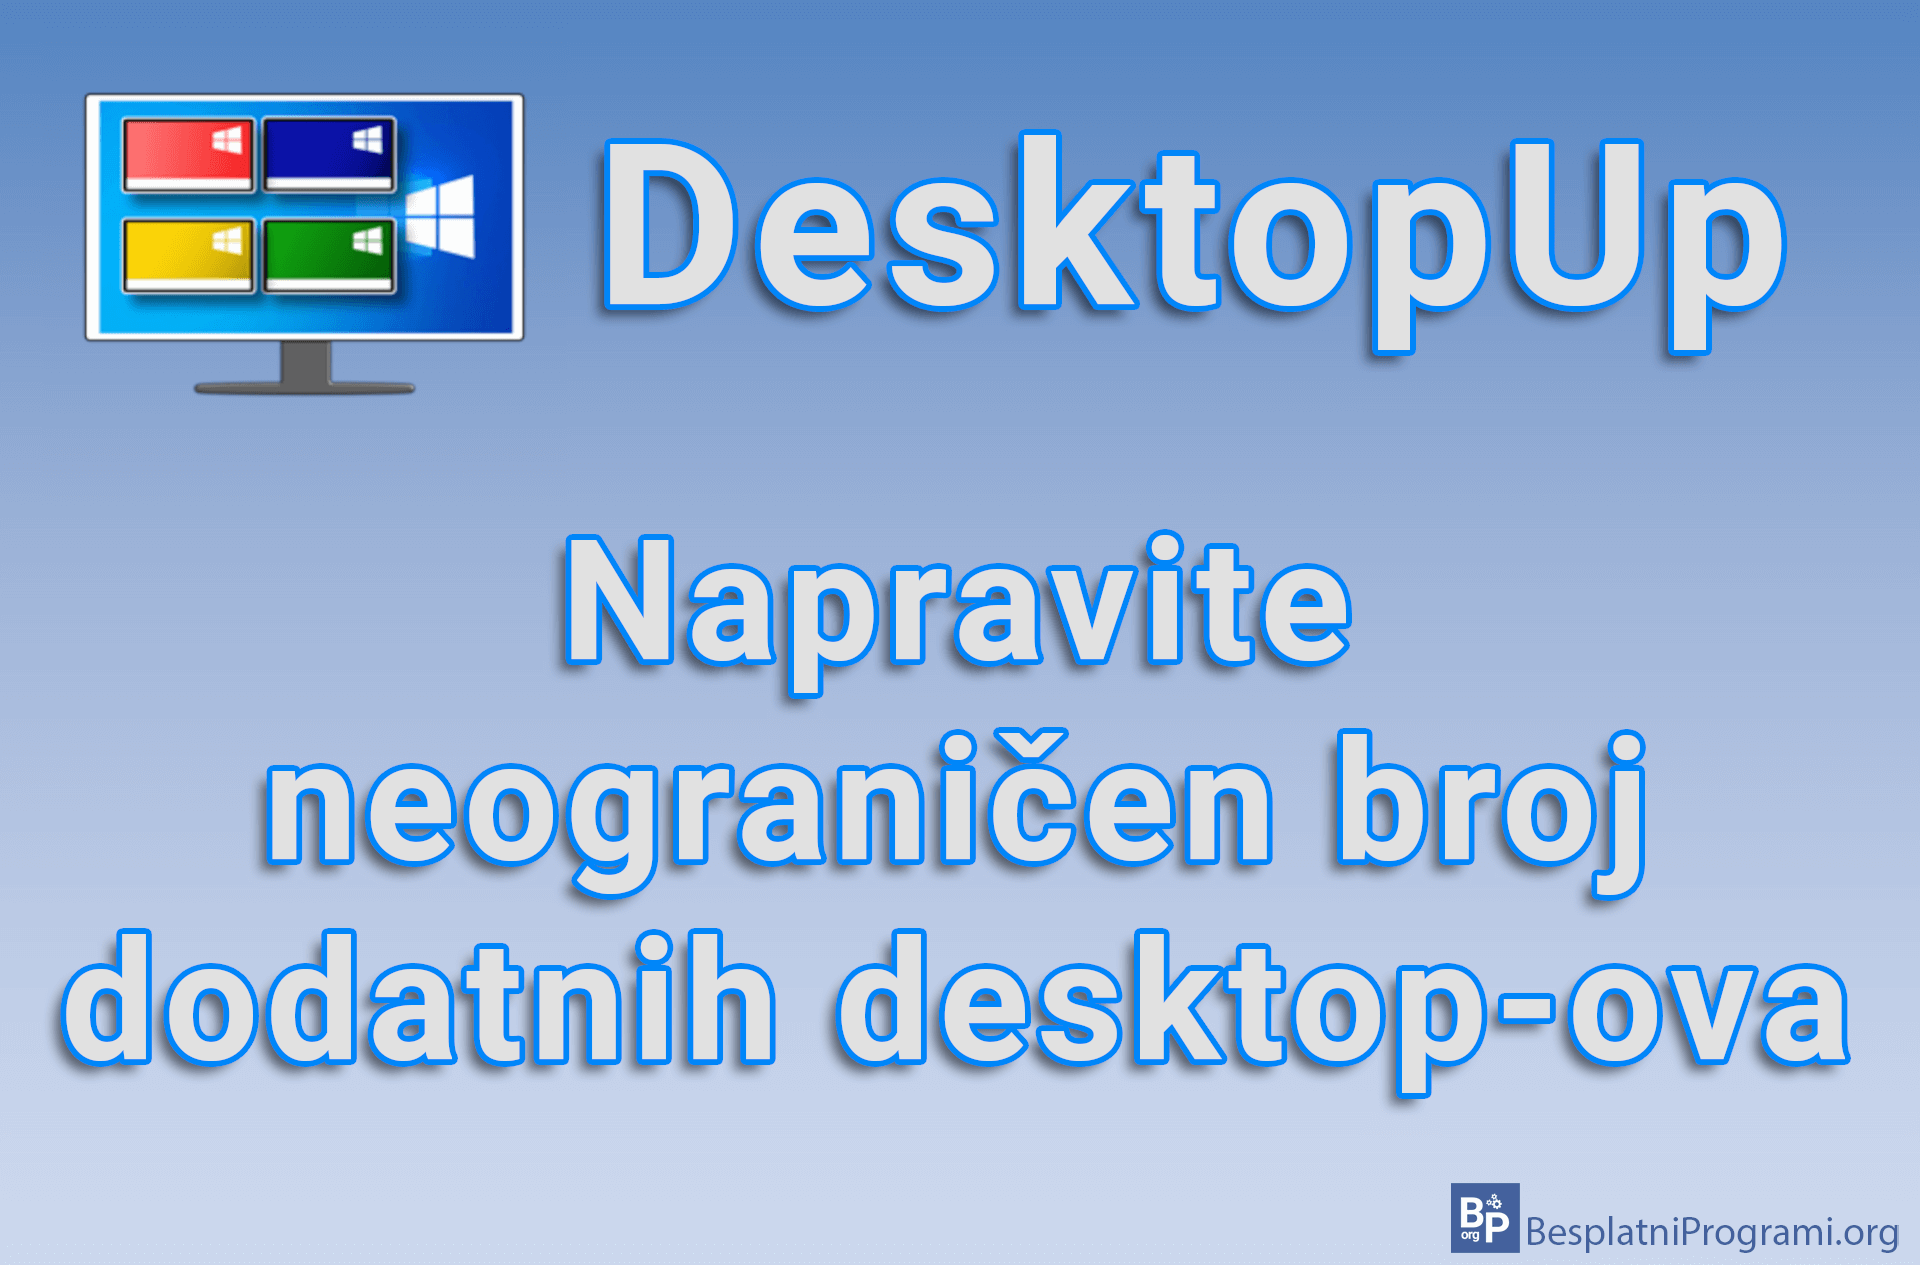 DesktopUp - Napravite neograničen broj dodatnih desktop-ova